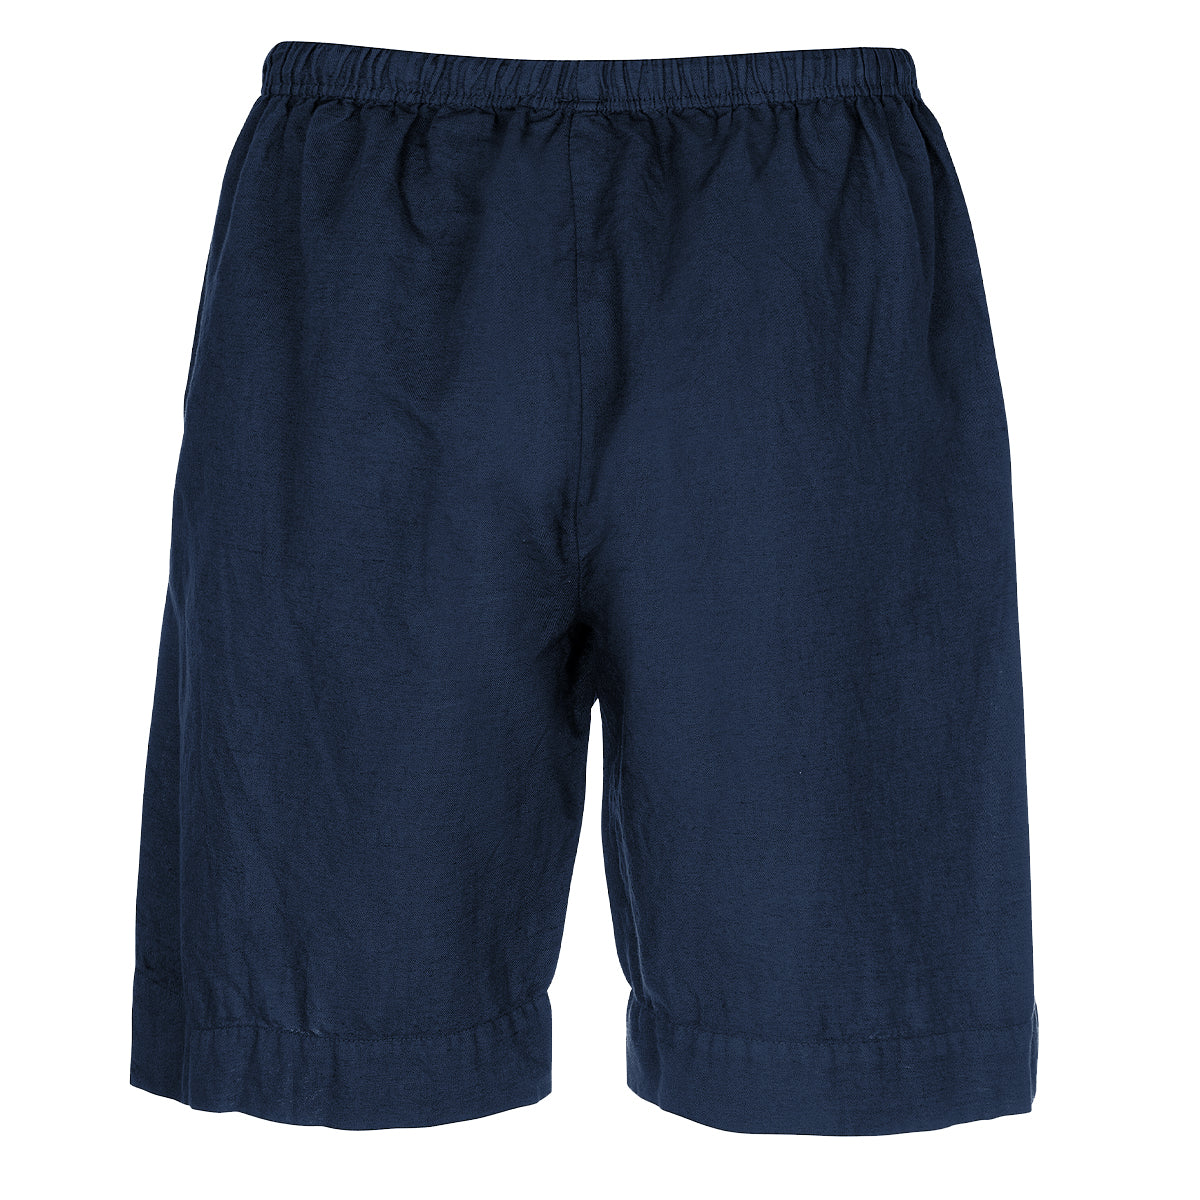 LUXZUZ // ONE TWO Lailai Shorts Shorts 575 Navy